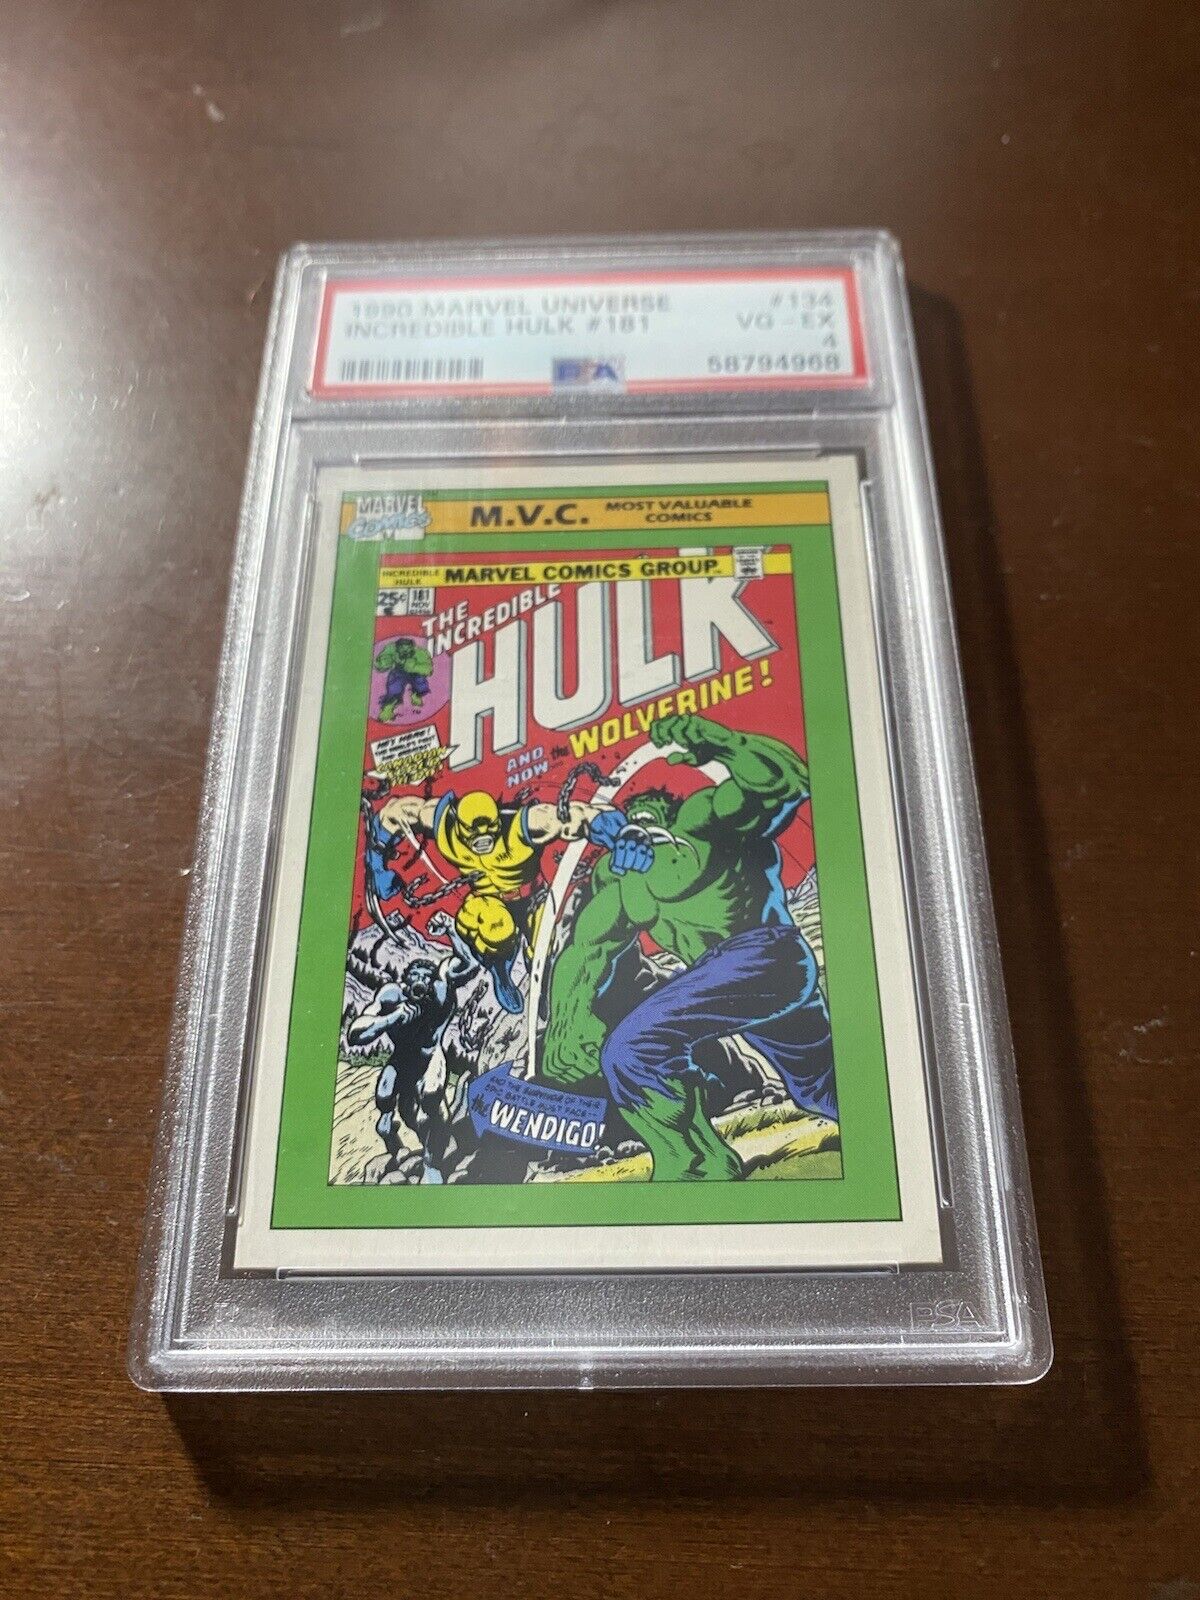 Marvel 1990 Universe #134 Incredible Hulk #181 PSA 4 WOLVERINE